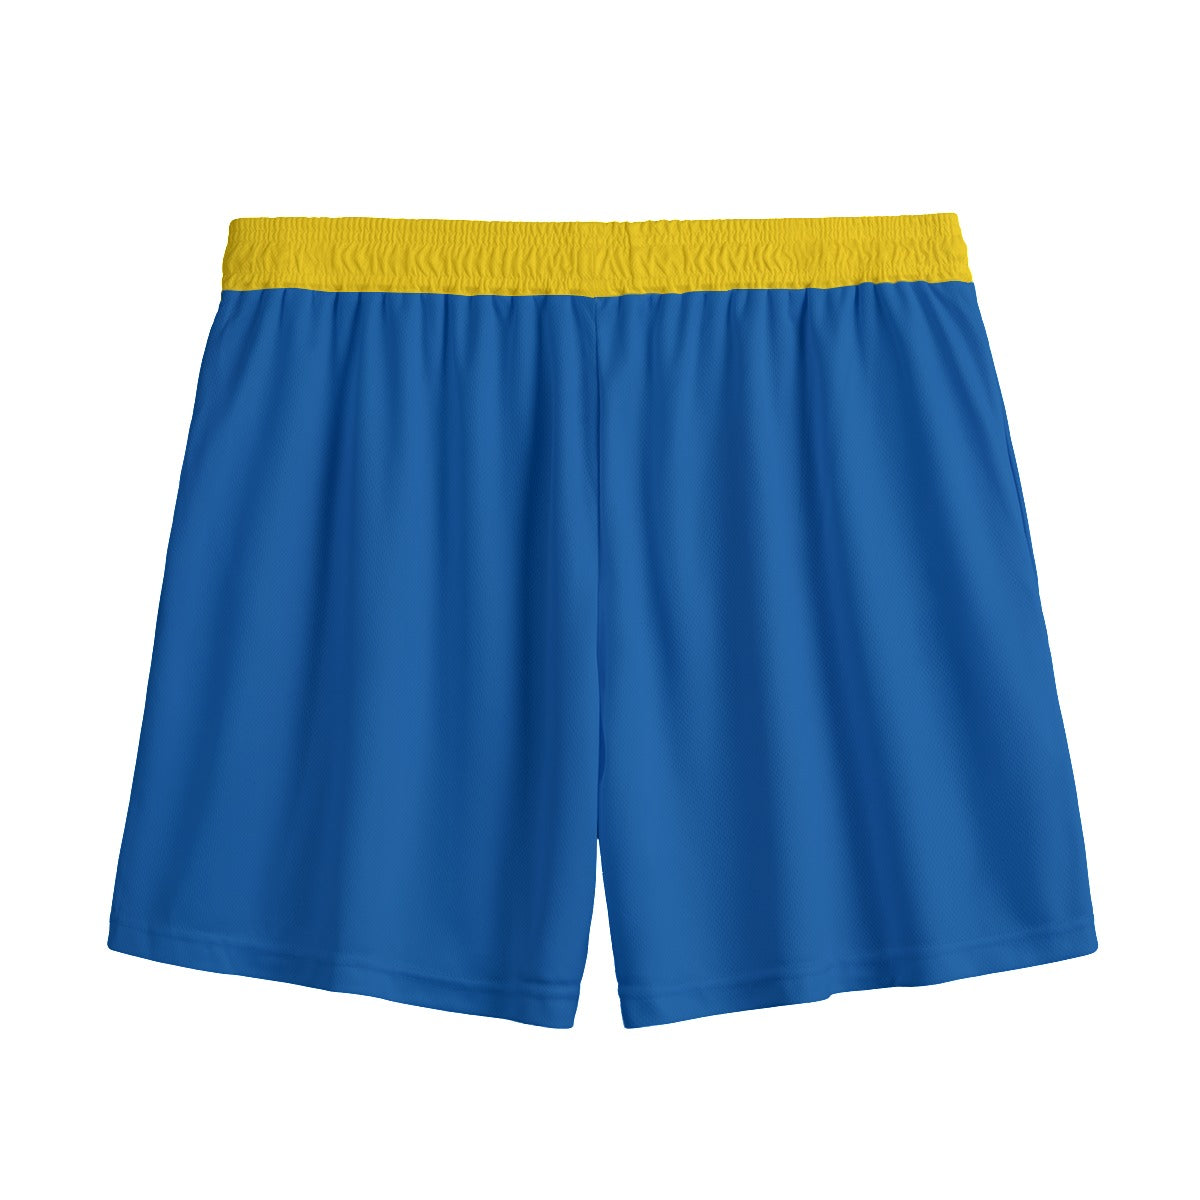 Delaware Mesh Shorts